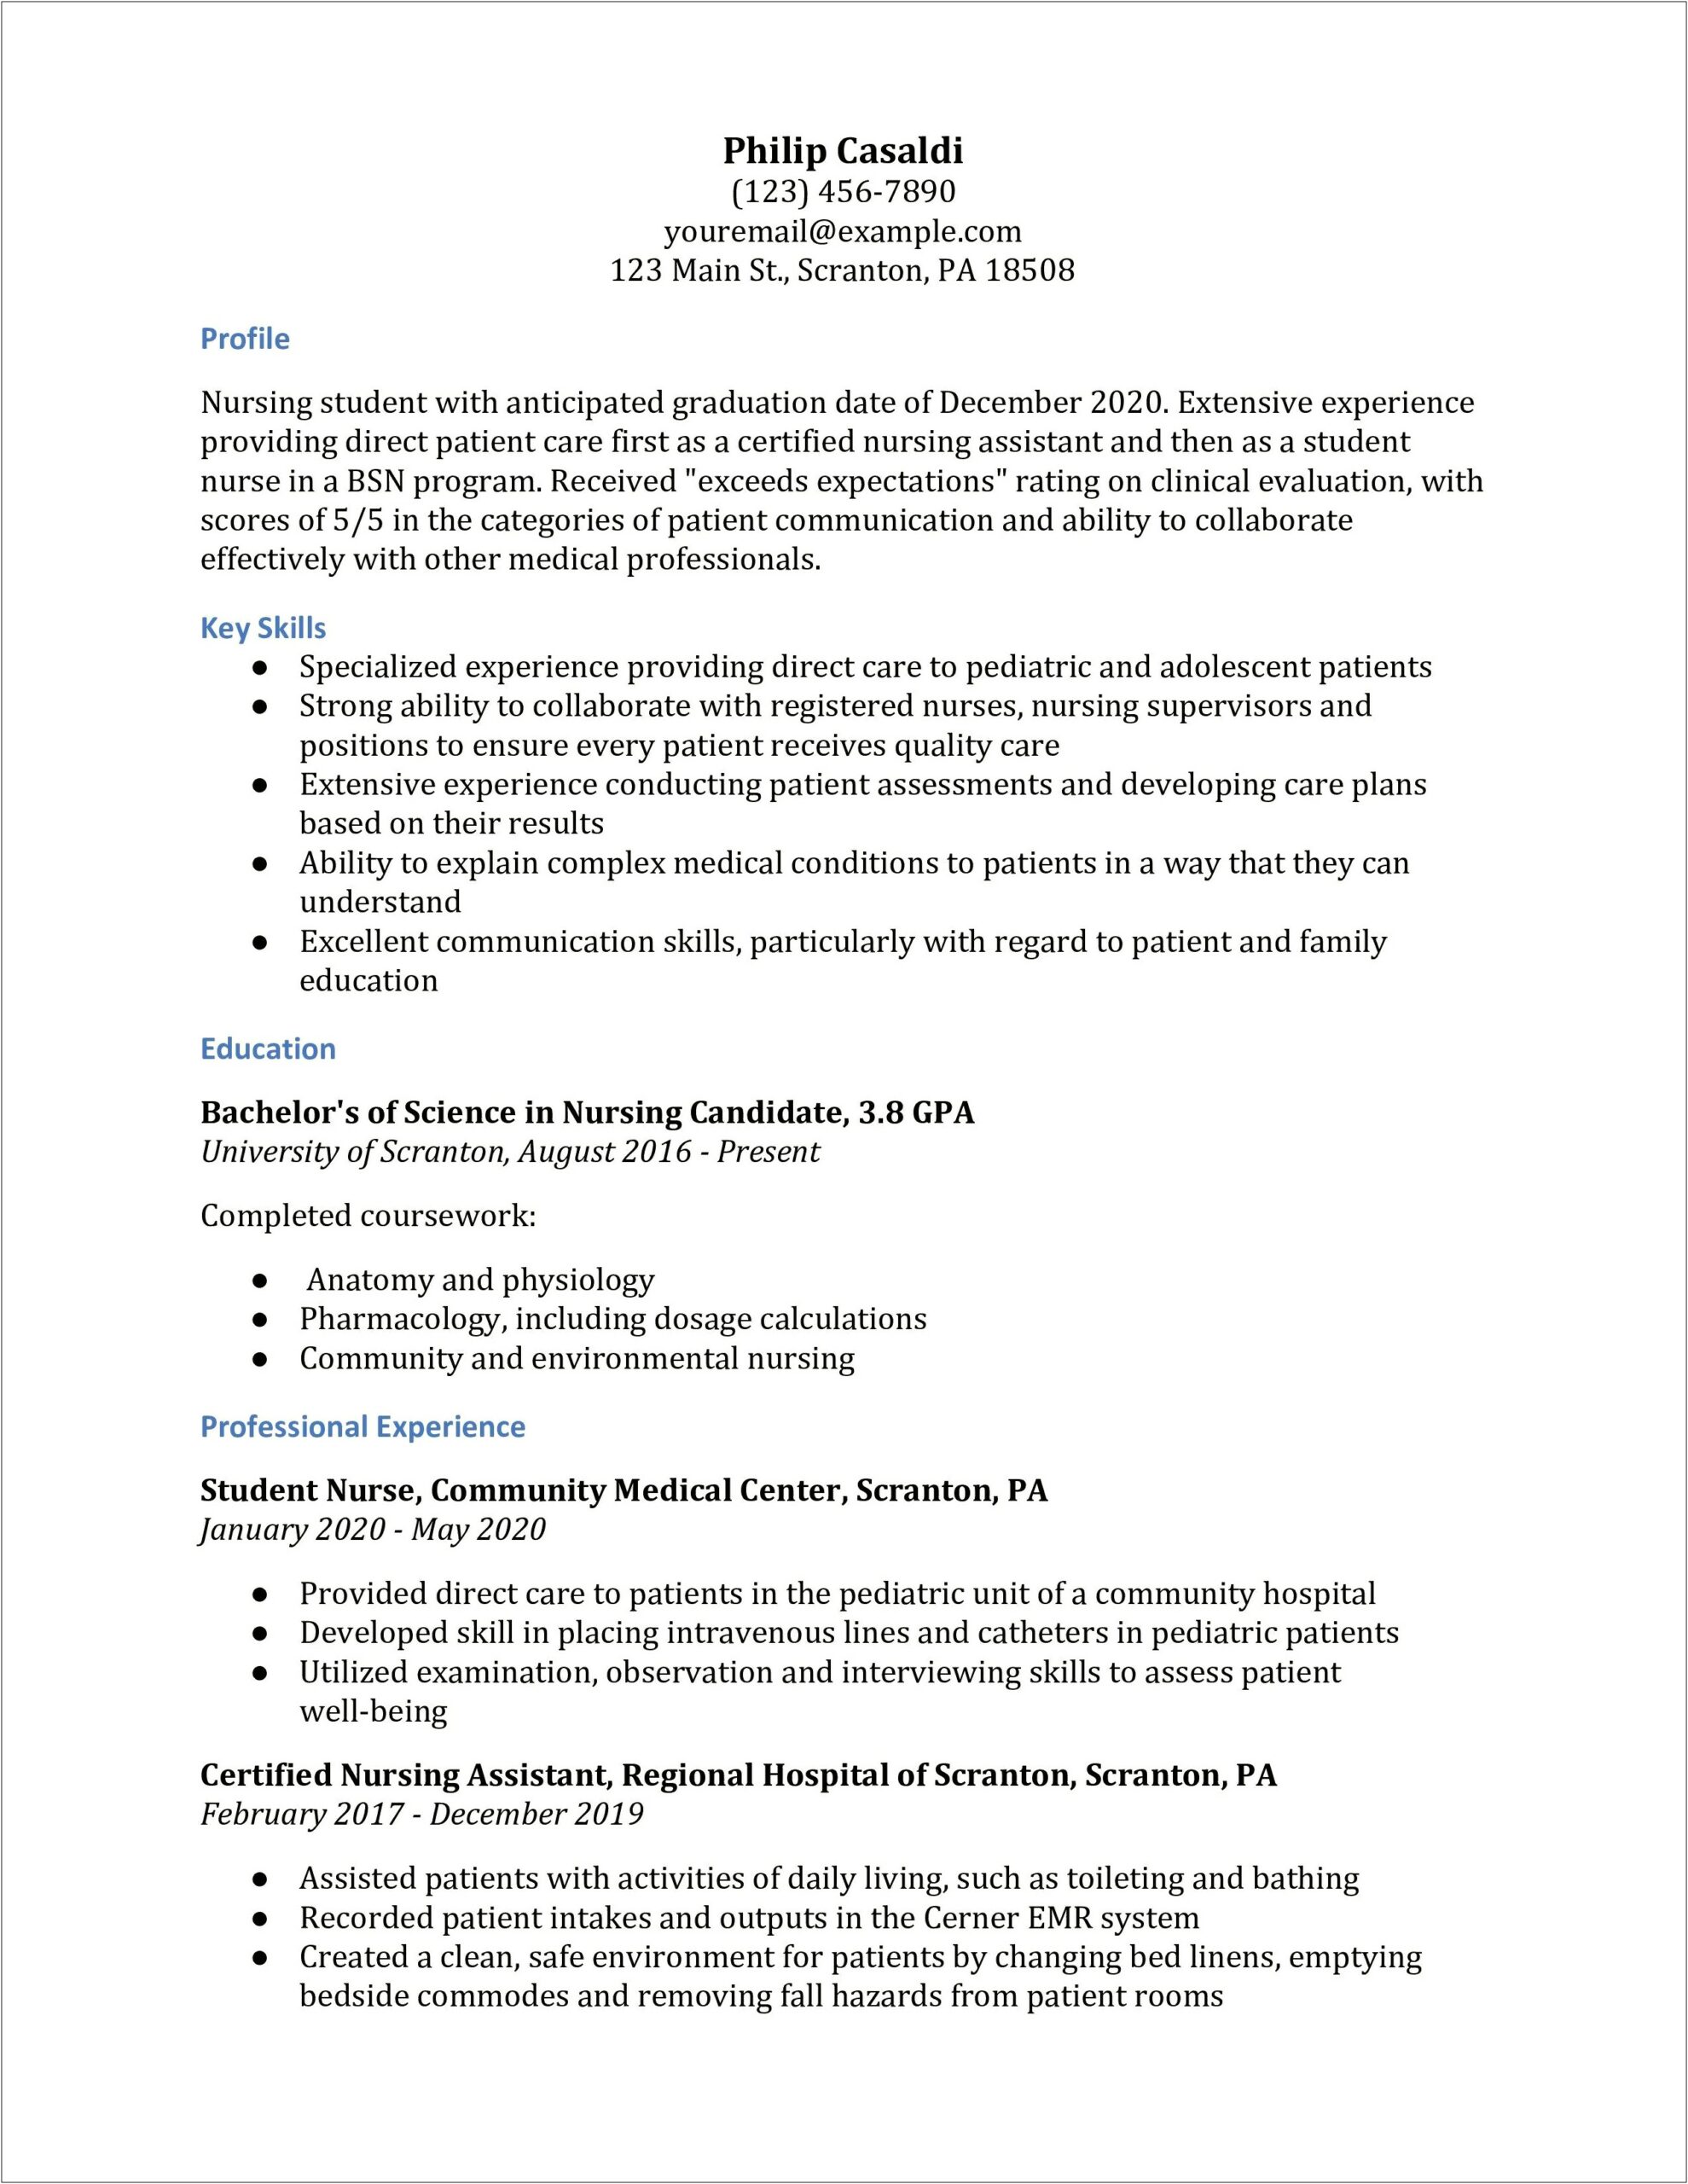 Nursing Student Clinical Skills For Resume